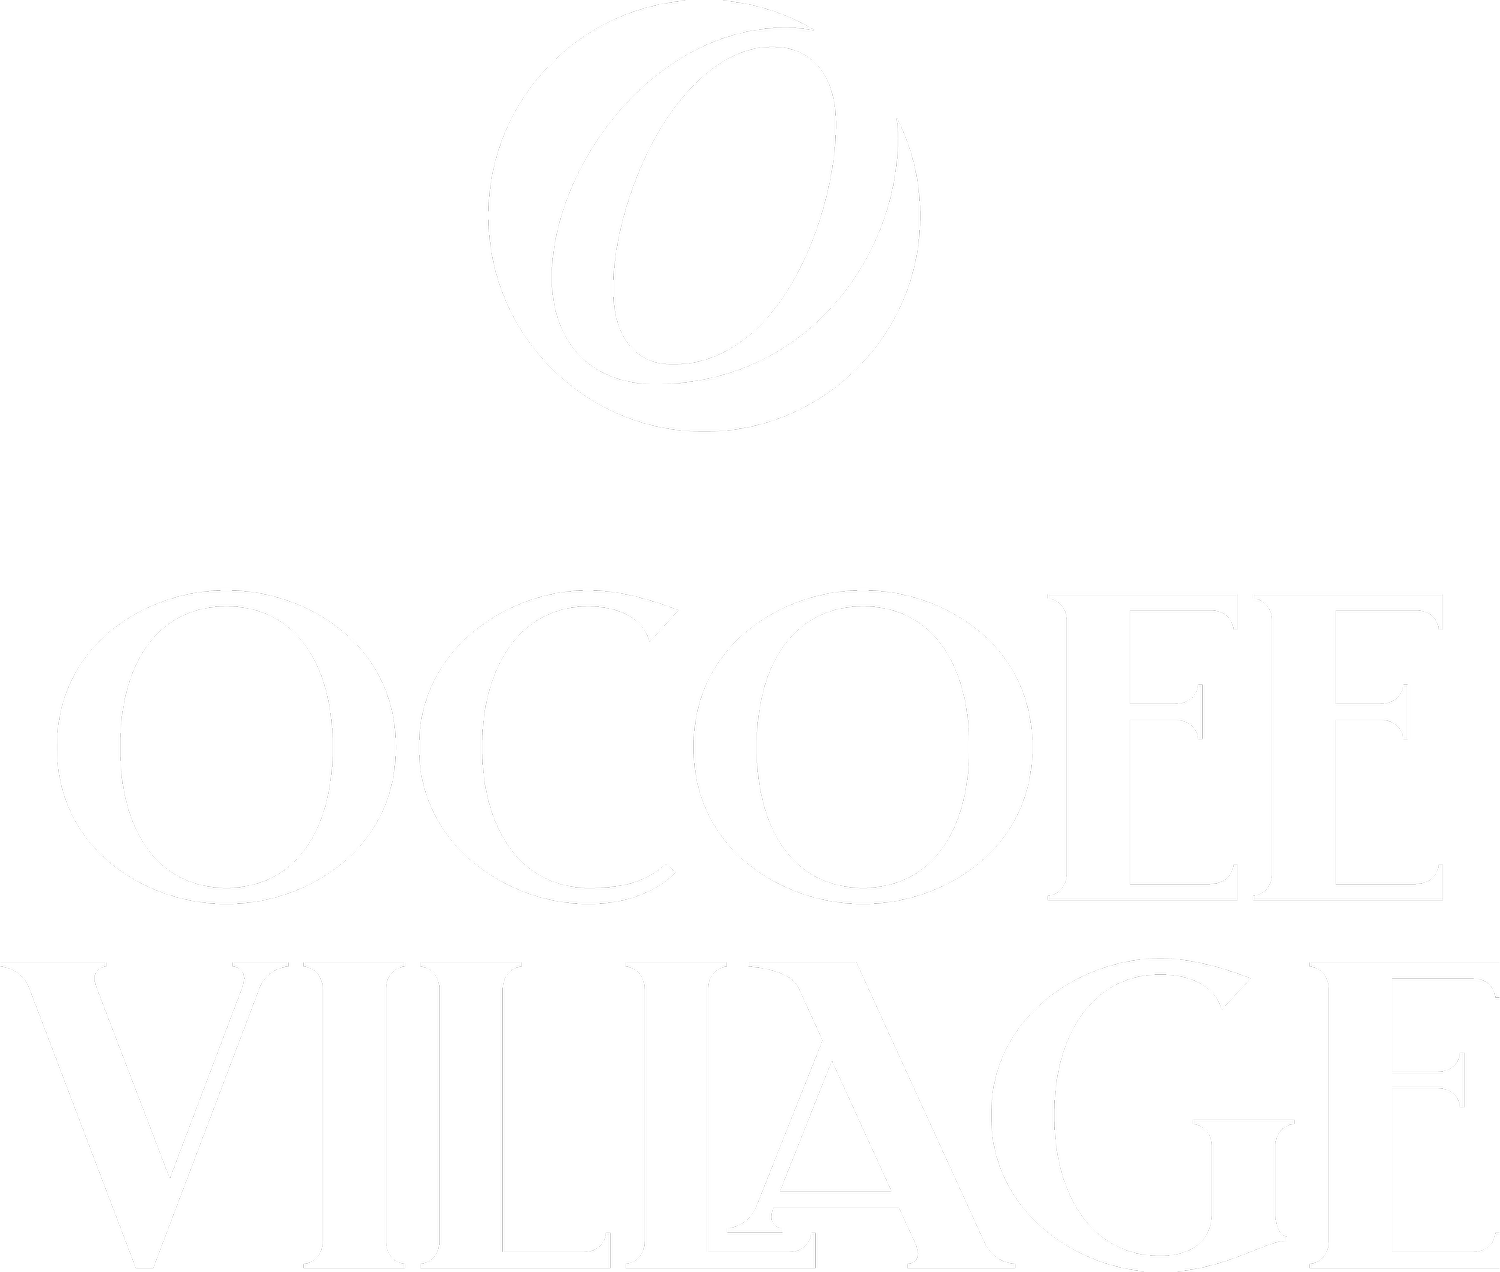 Ocoee Village by Kimaya